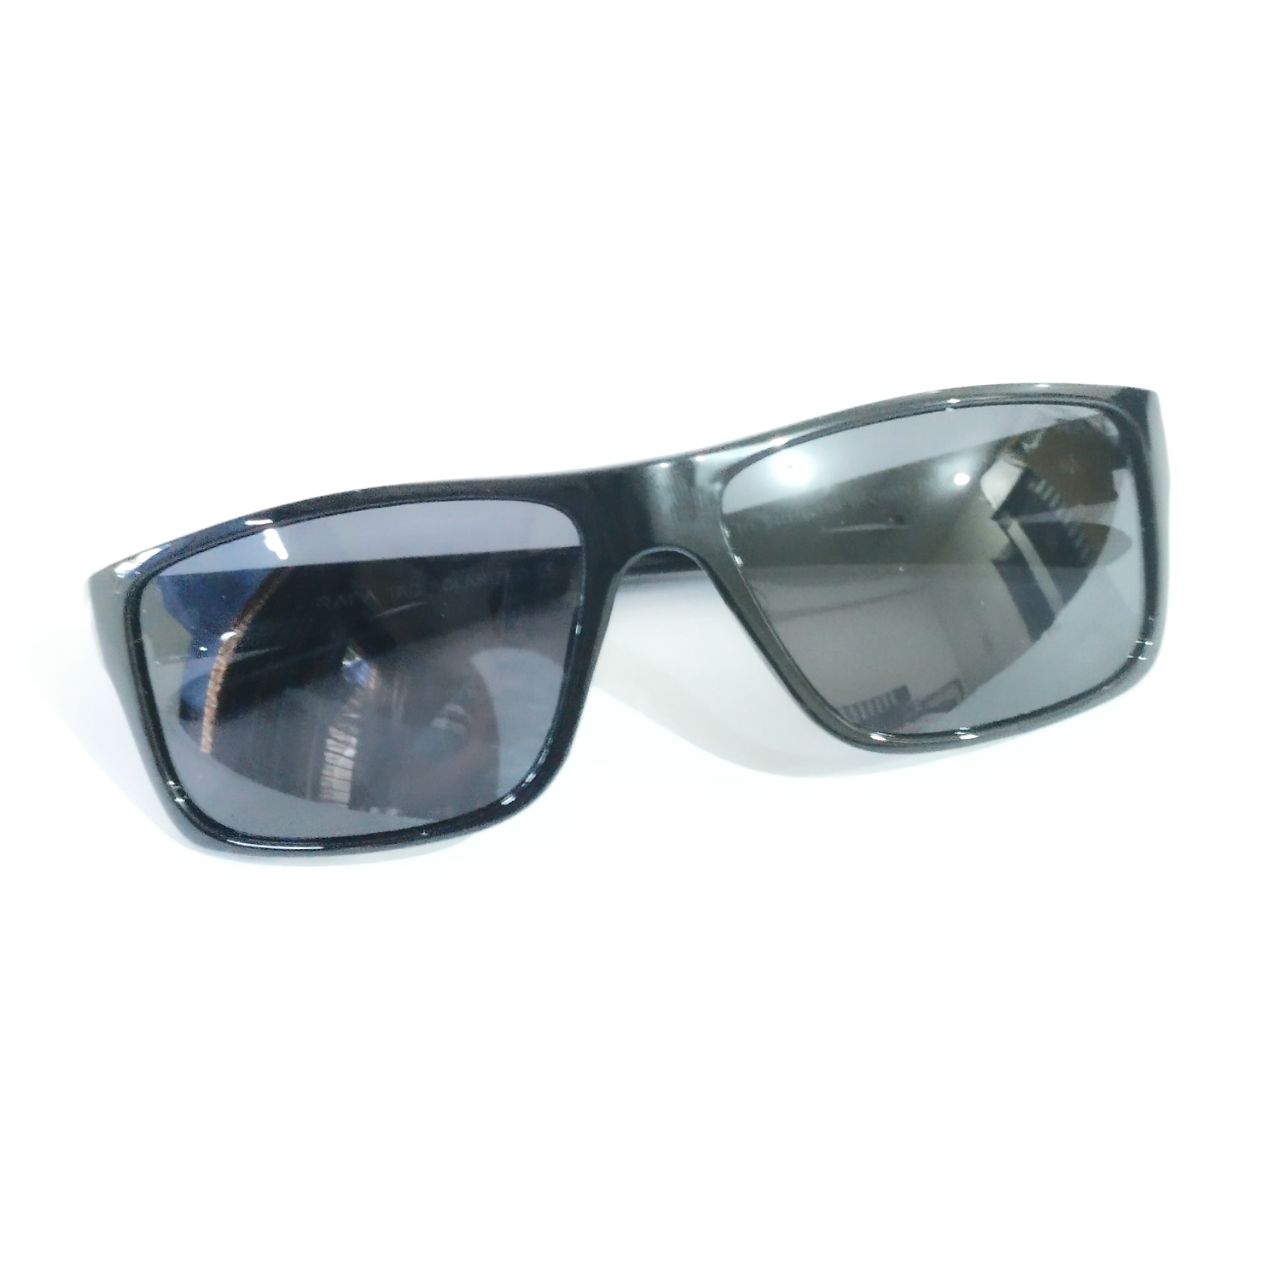 Black Sports Polarized Sunglasses for Men and Women